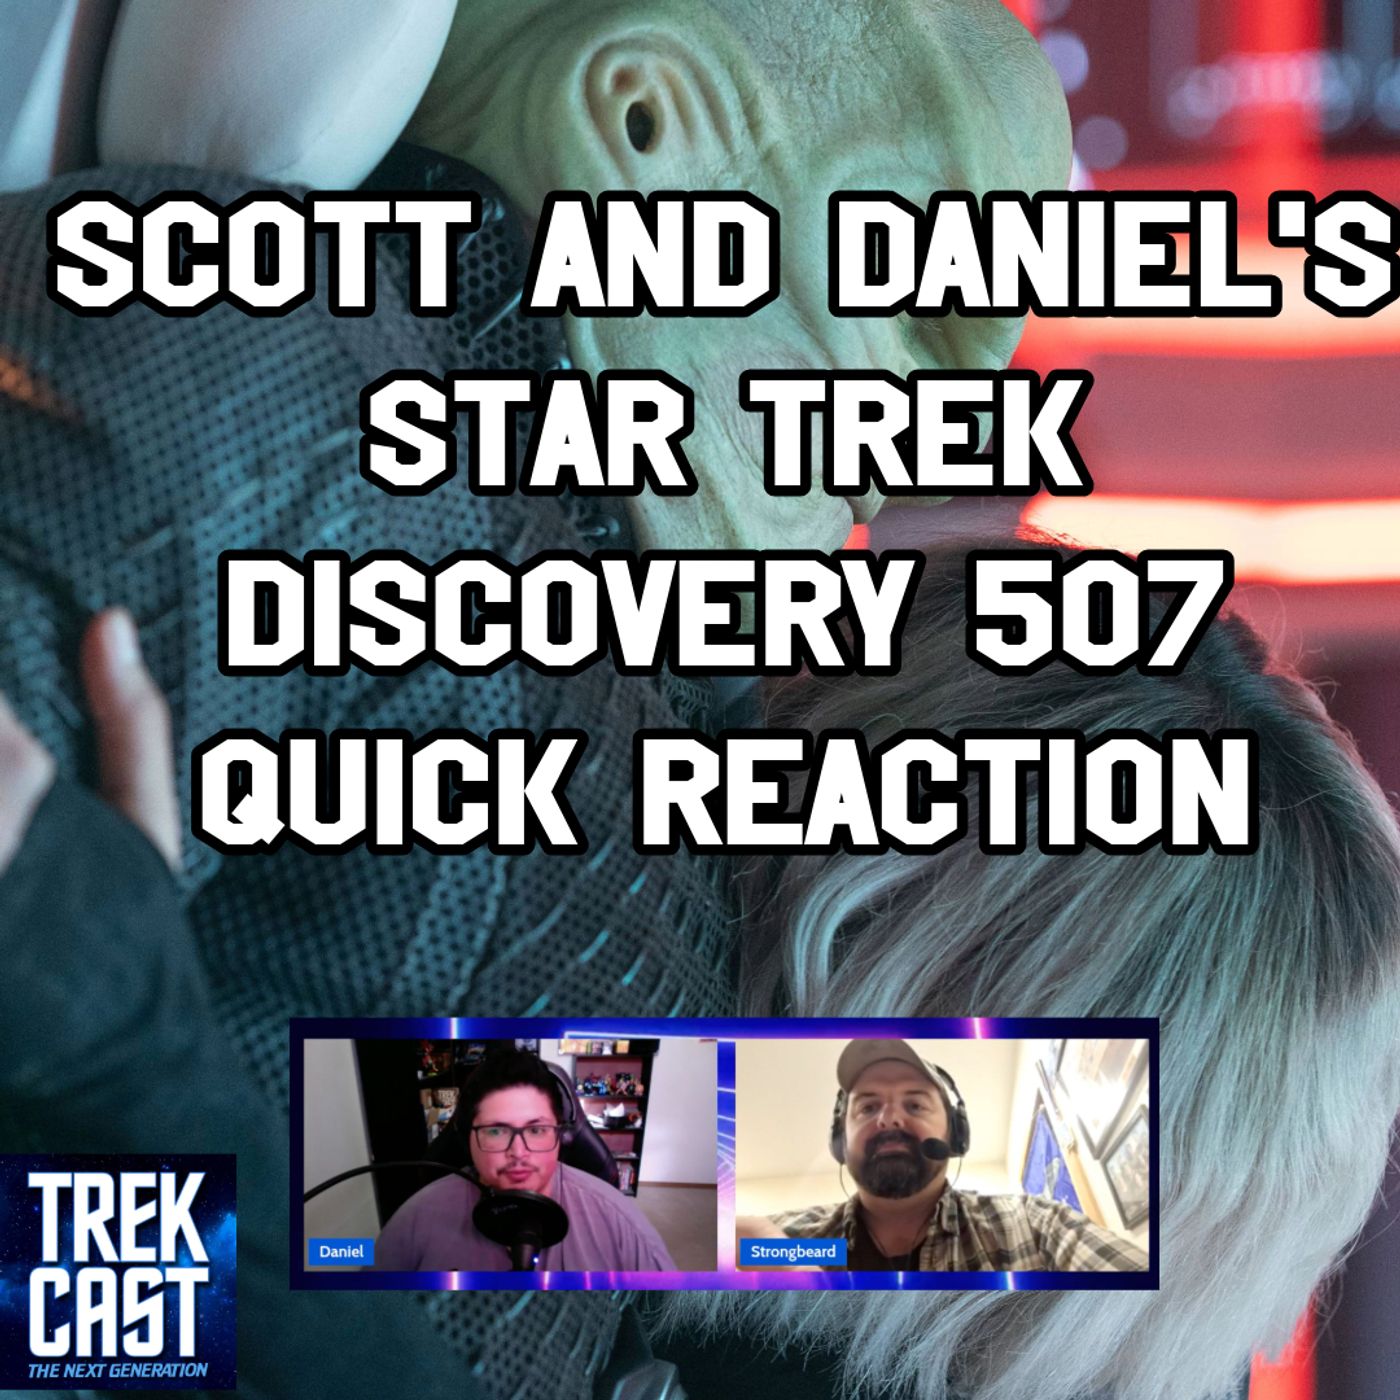 Scott and Daniel’s Star Trek Discovery 507 QUICK REACTION